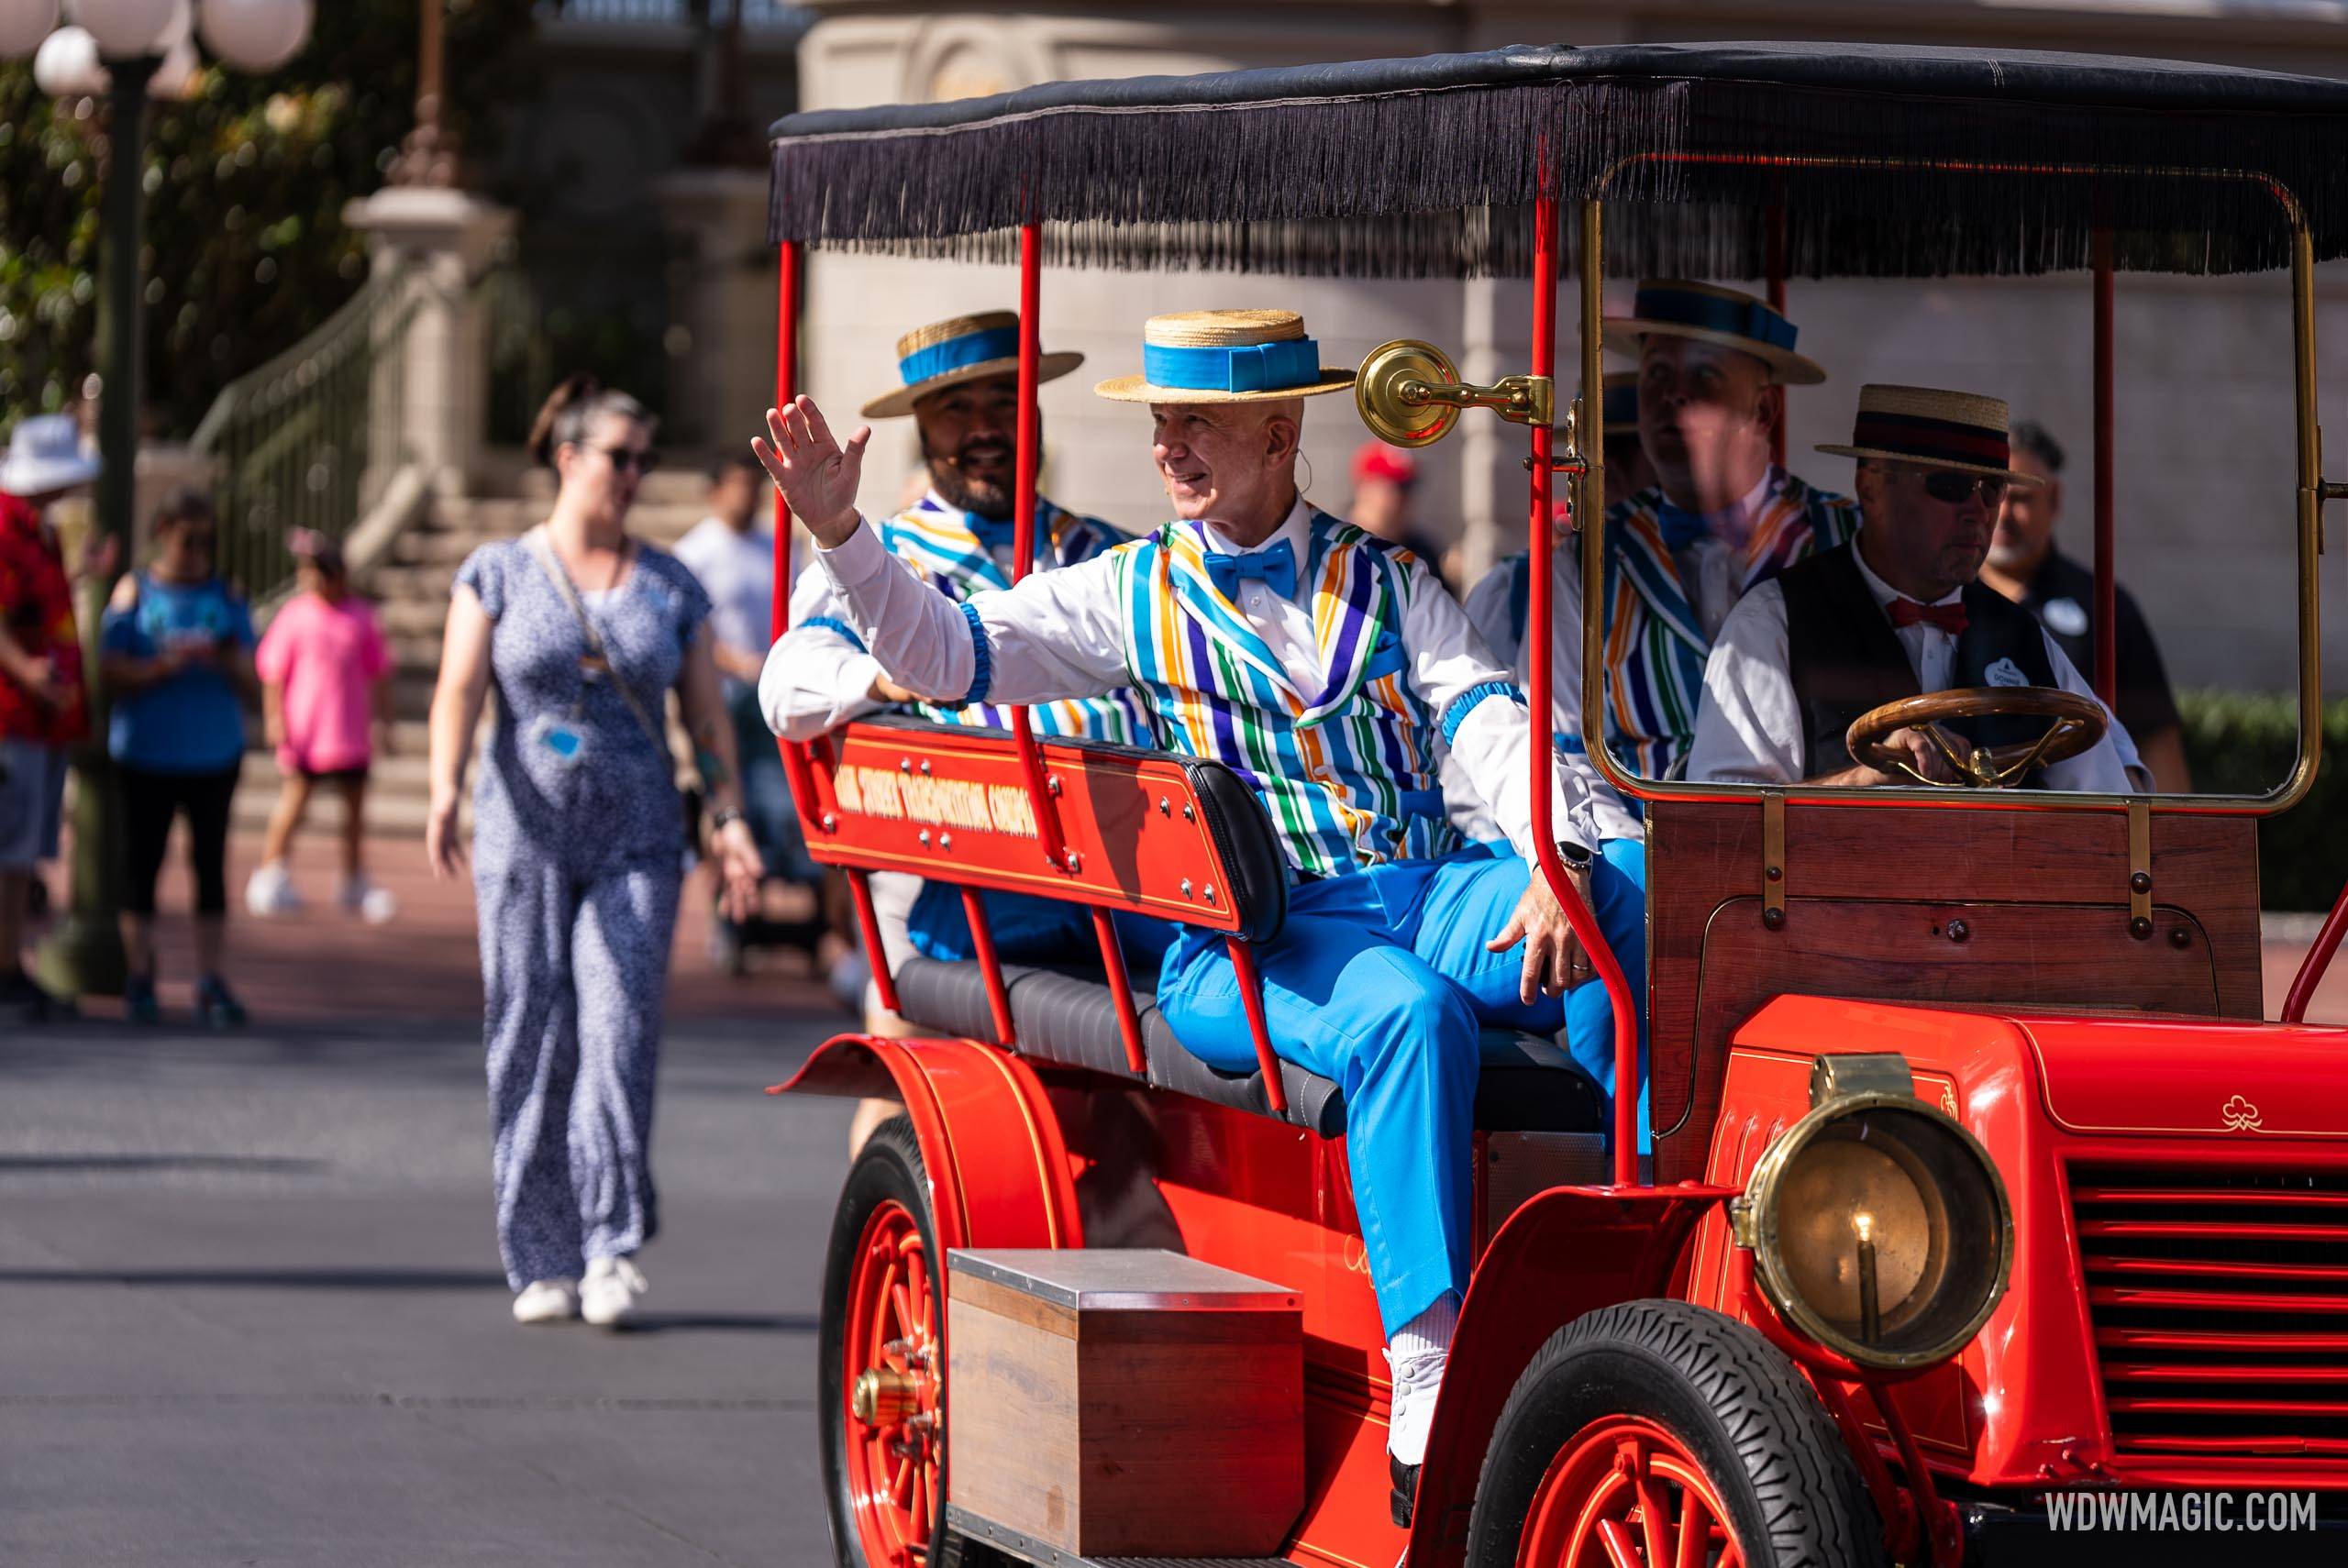 2024 Main Street, U.S.A costumes